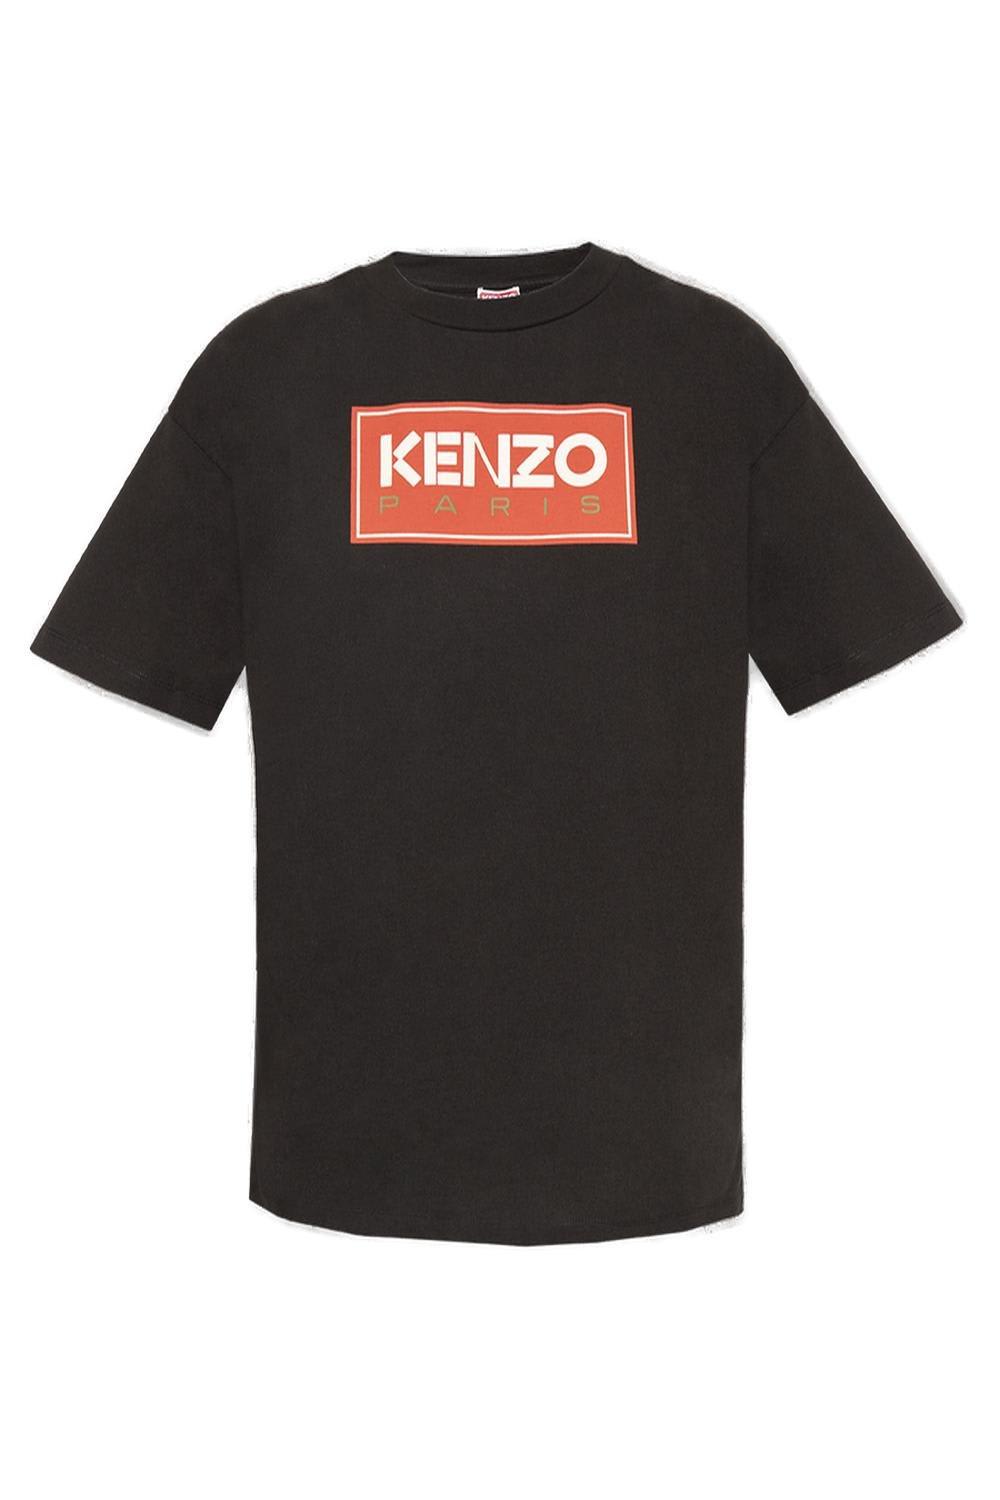 KENZO LOGO PRINTED CREWNECK T-SHIRT